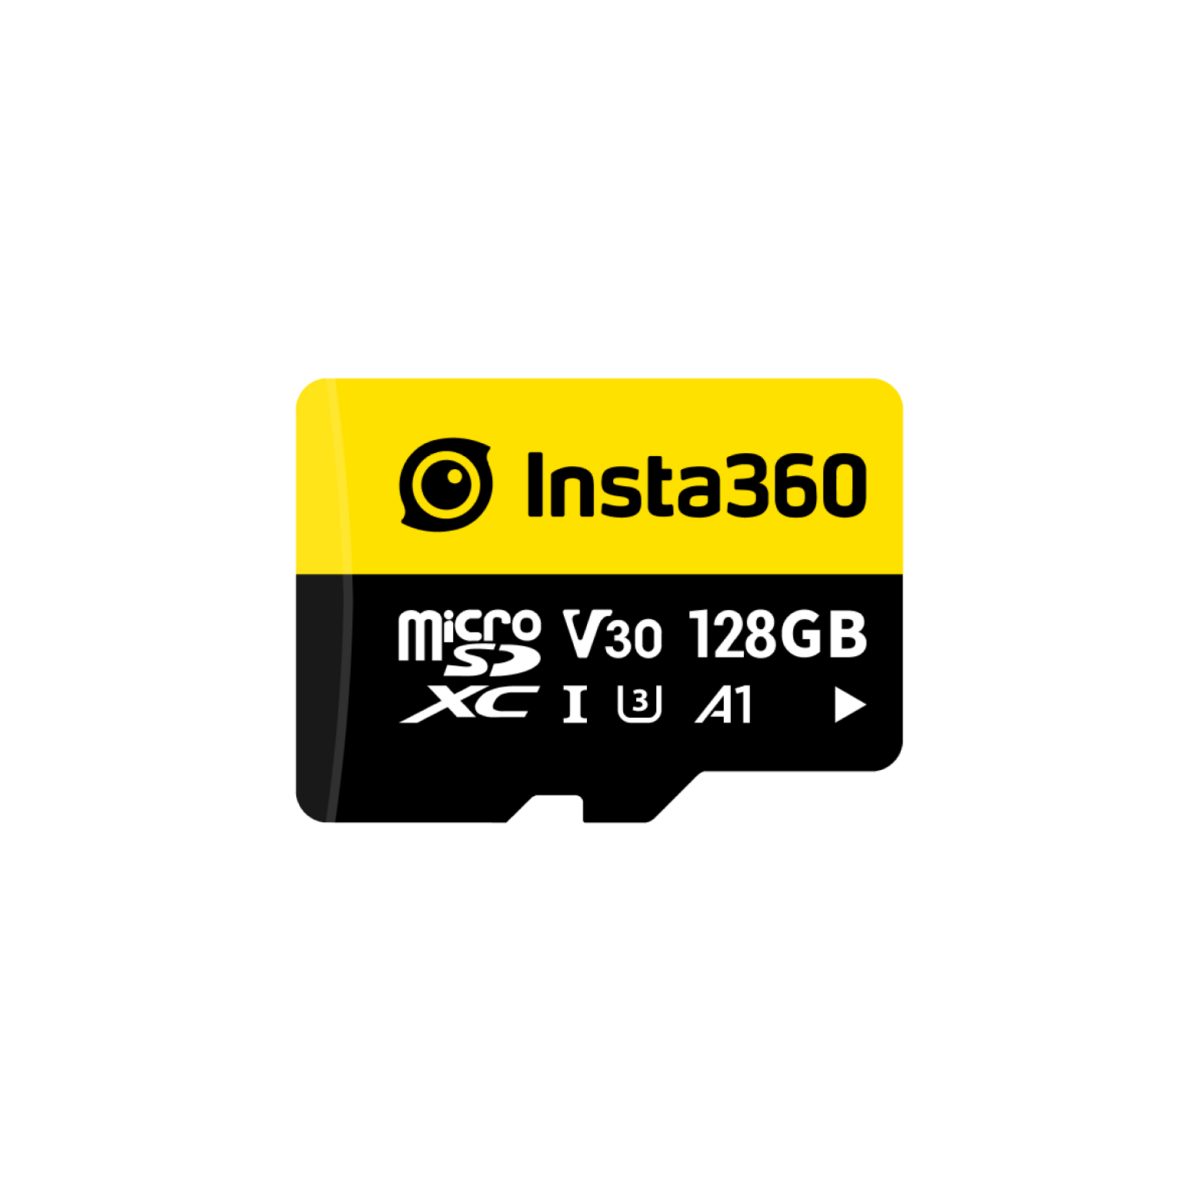 Insta360 128GB SD Card - Micro SD V30, XC1 U3 A1 - Insta360 2.35.72.01.026